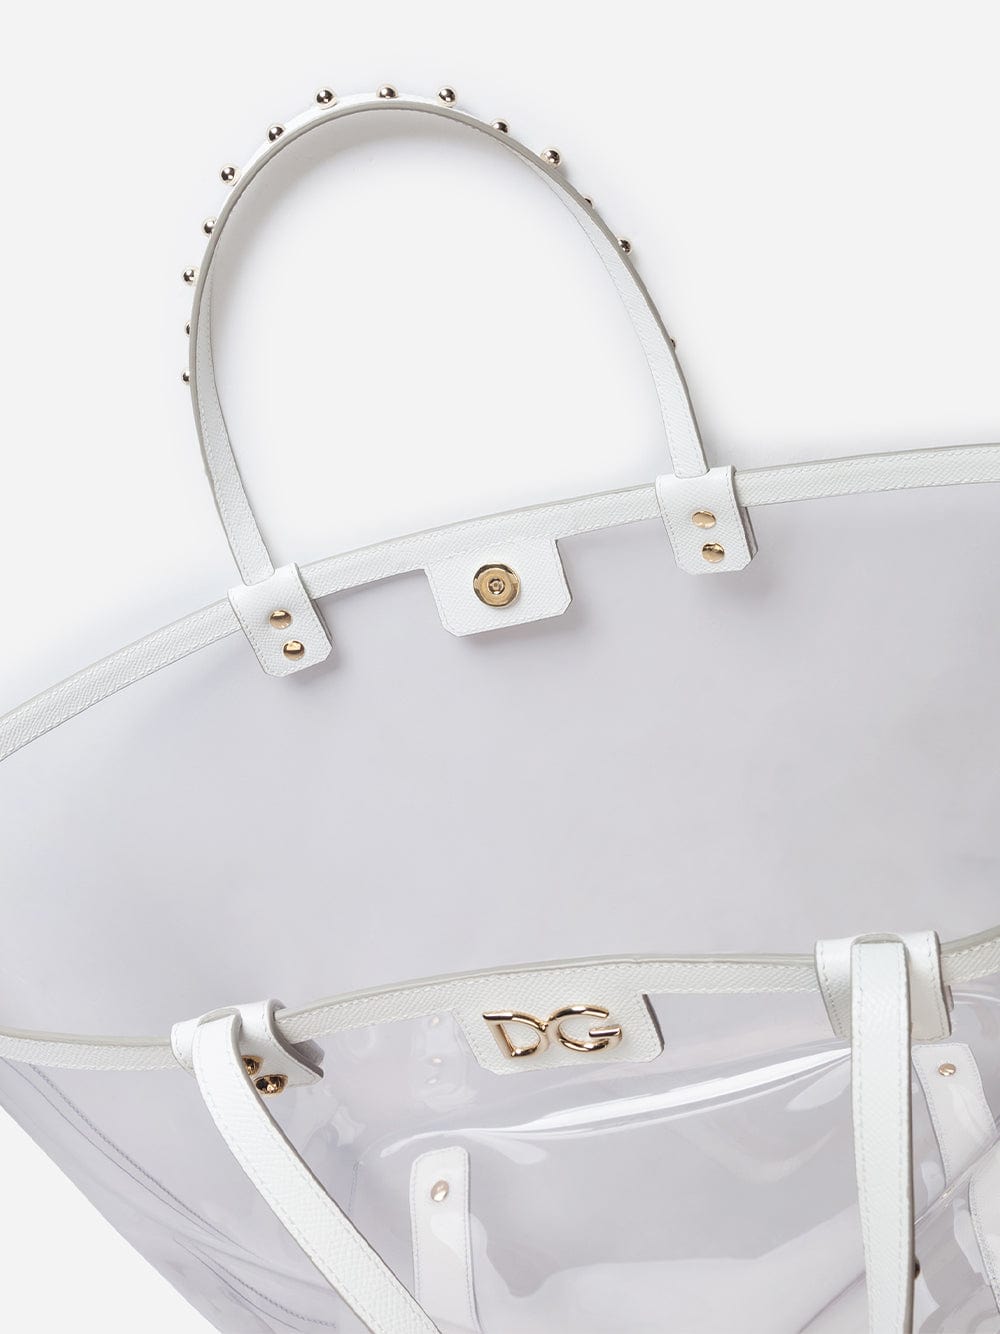 Dolce & Gabbana Tropical Rose Print Beatrice Shopping Bag